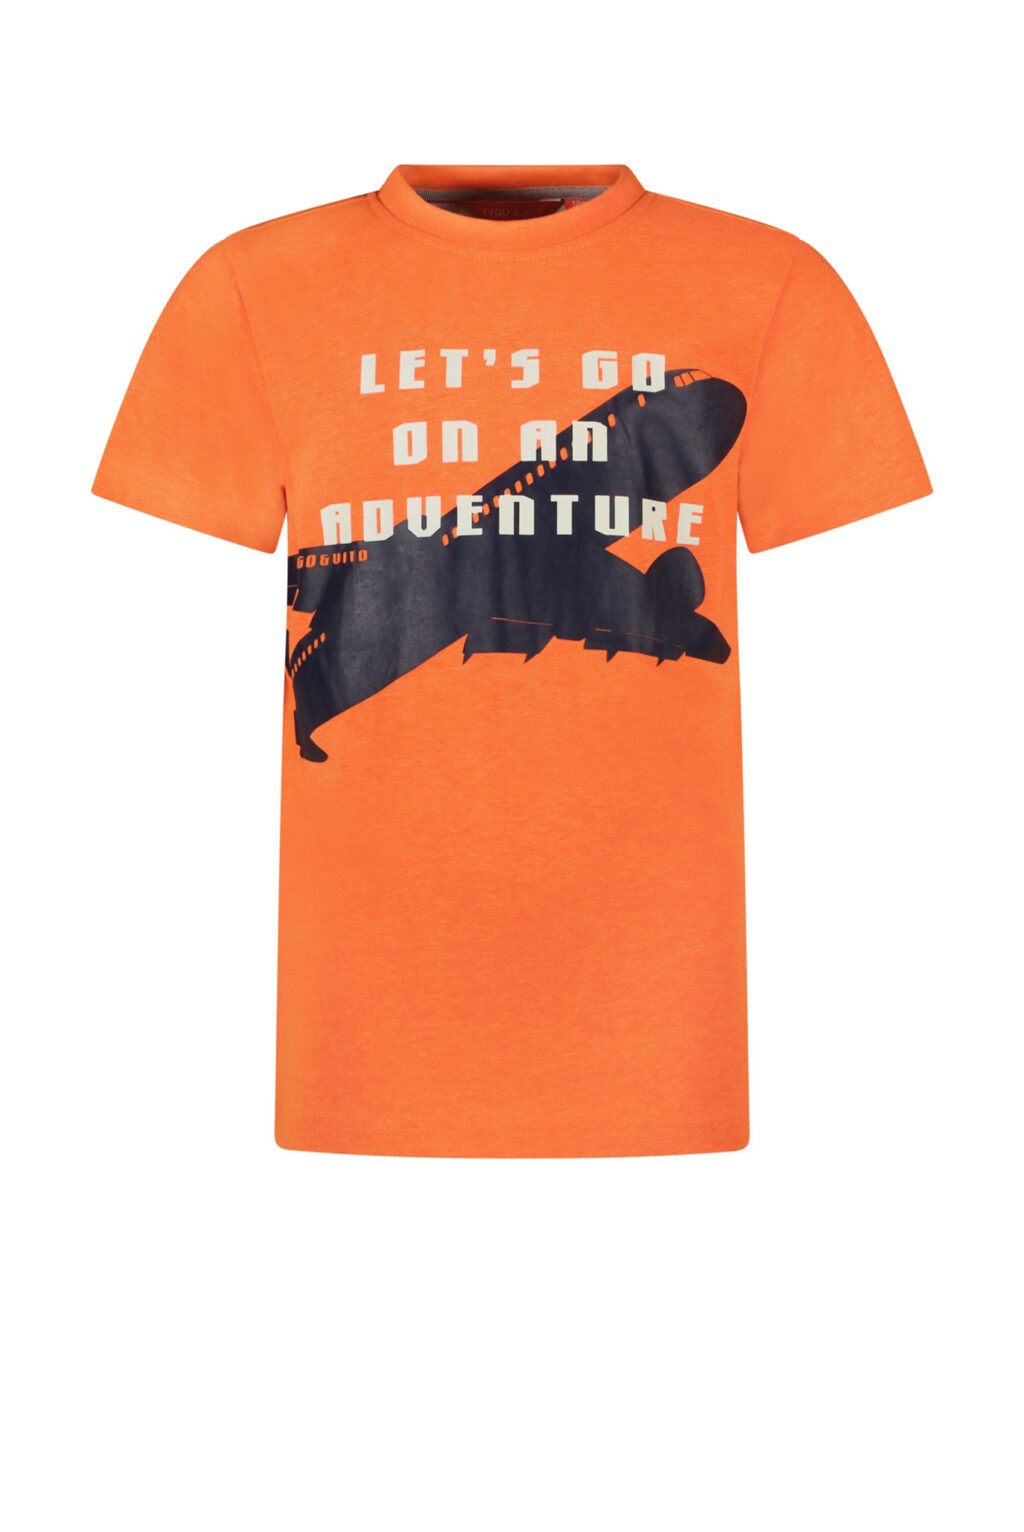 Tygo & Vito Jongens t-shirt vliegtuig - Oranje clownfish ~ Spinze.nl